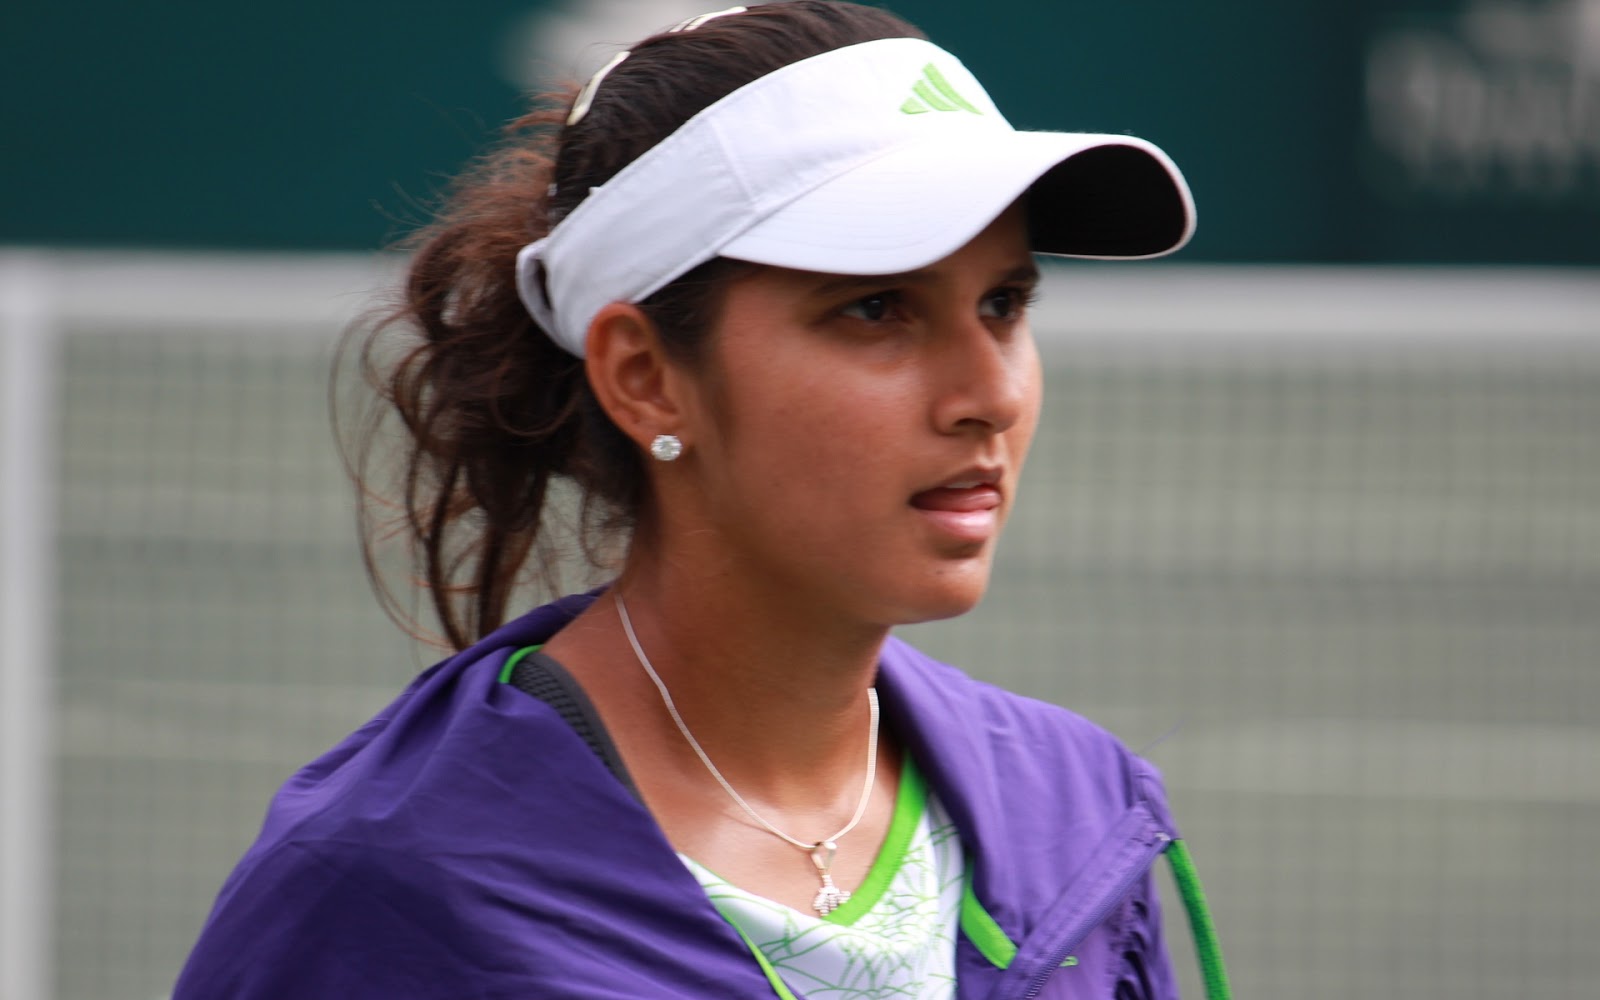 Saniya-Mirza-Tenis-Player-Hd-Images-and-Wallpapers